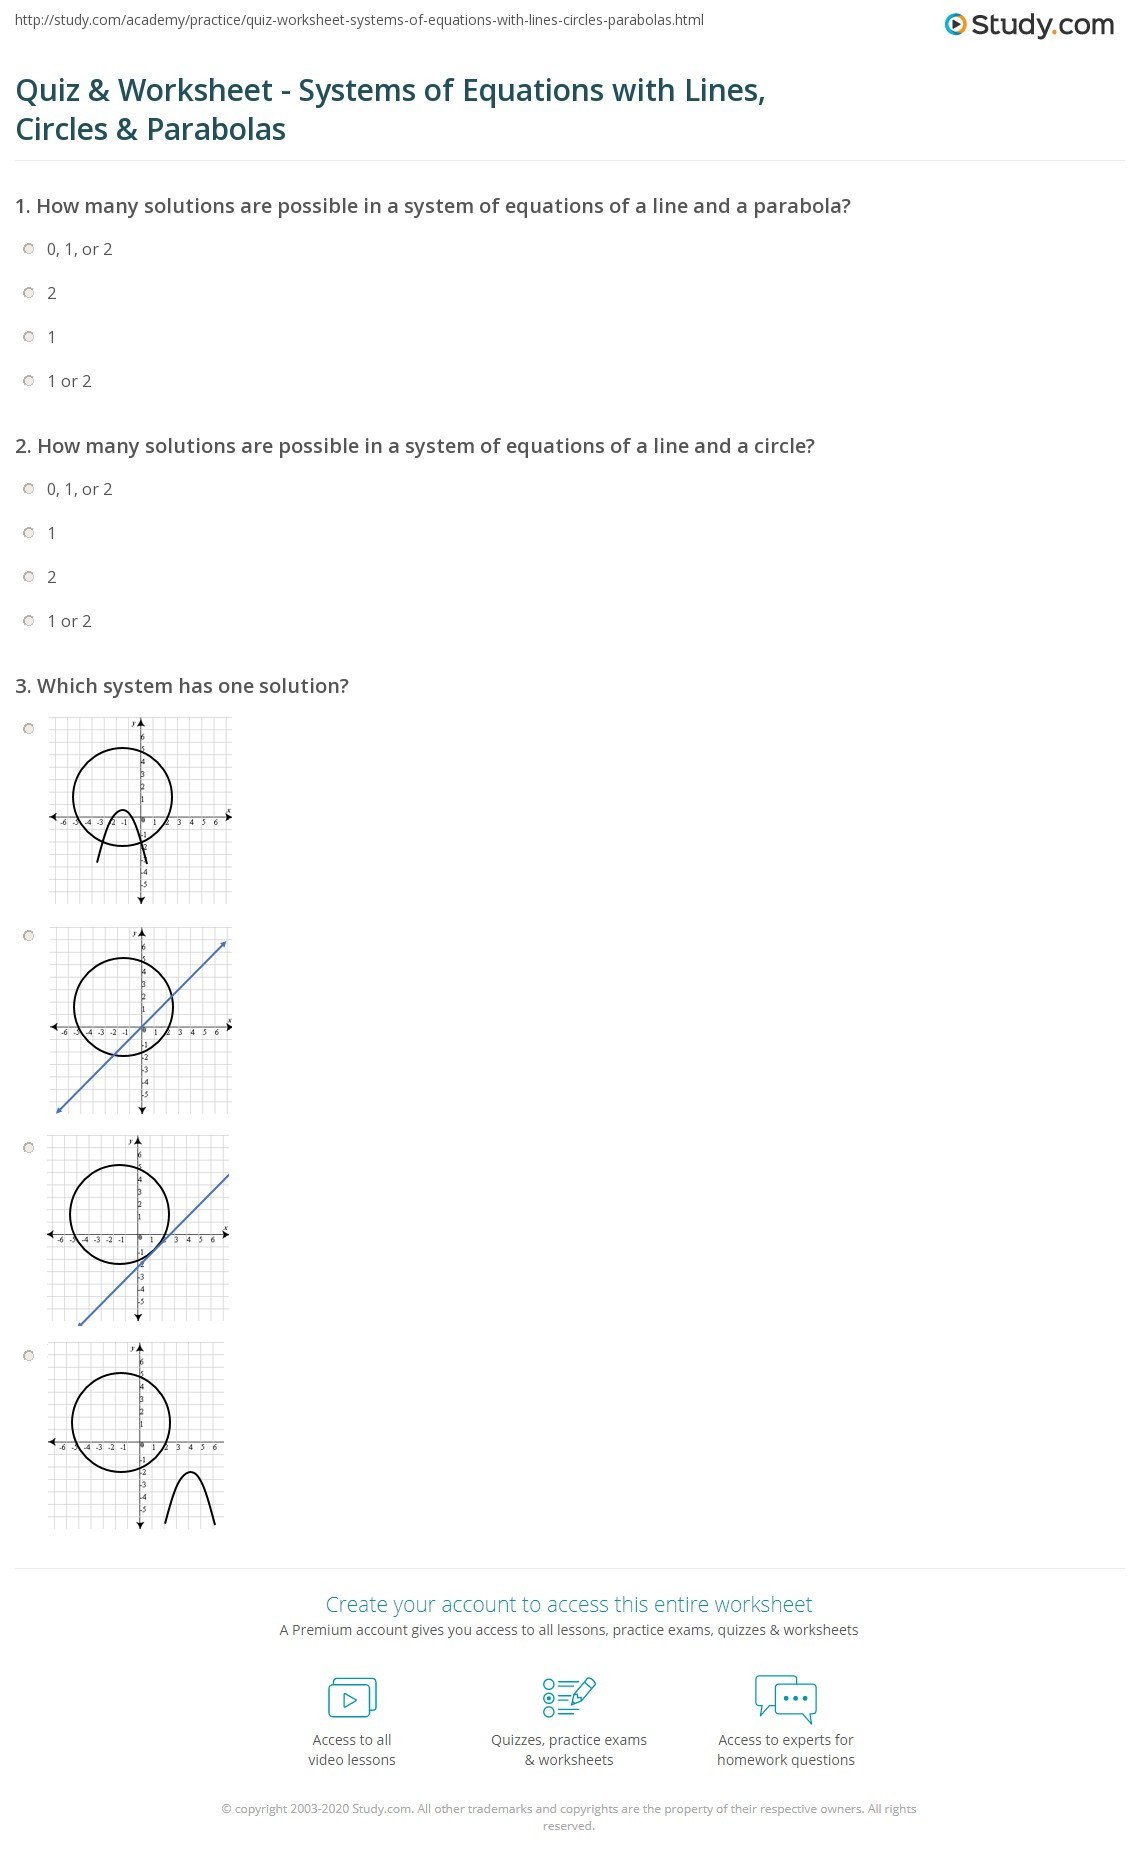 Equations Of Circles Worksheet Quiz &amp; Worksheet Systems Of Equations with Lines Circles